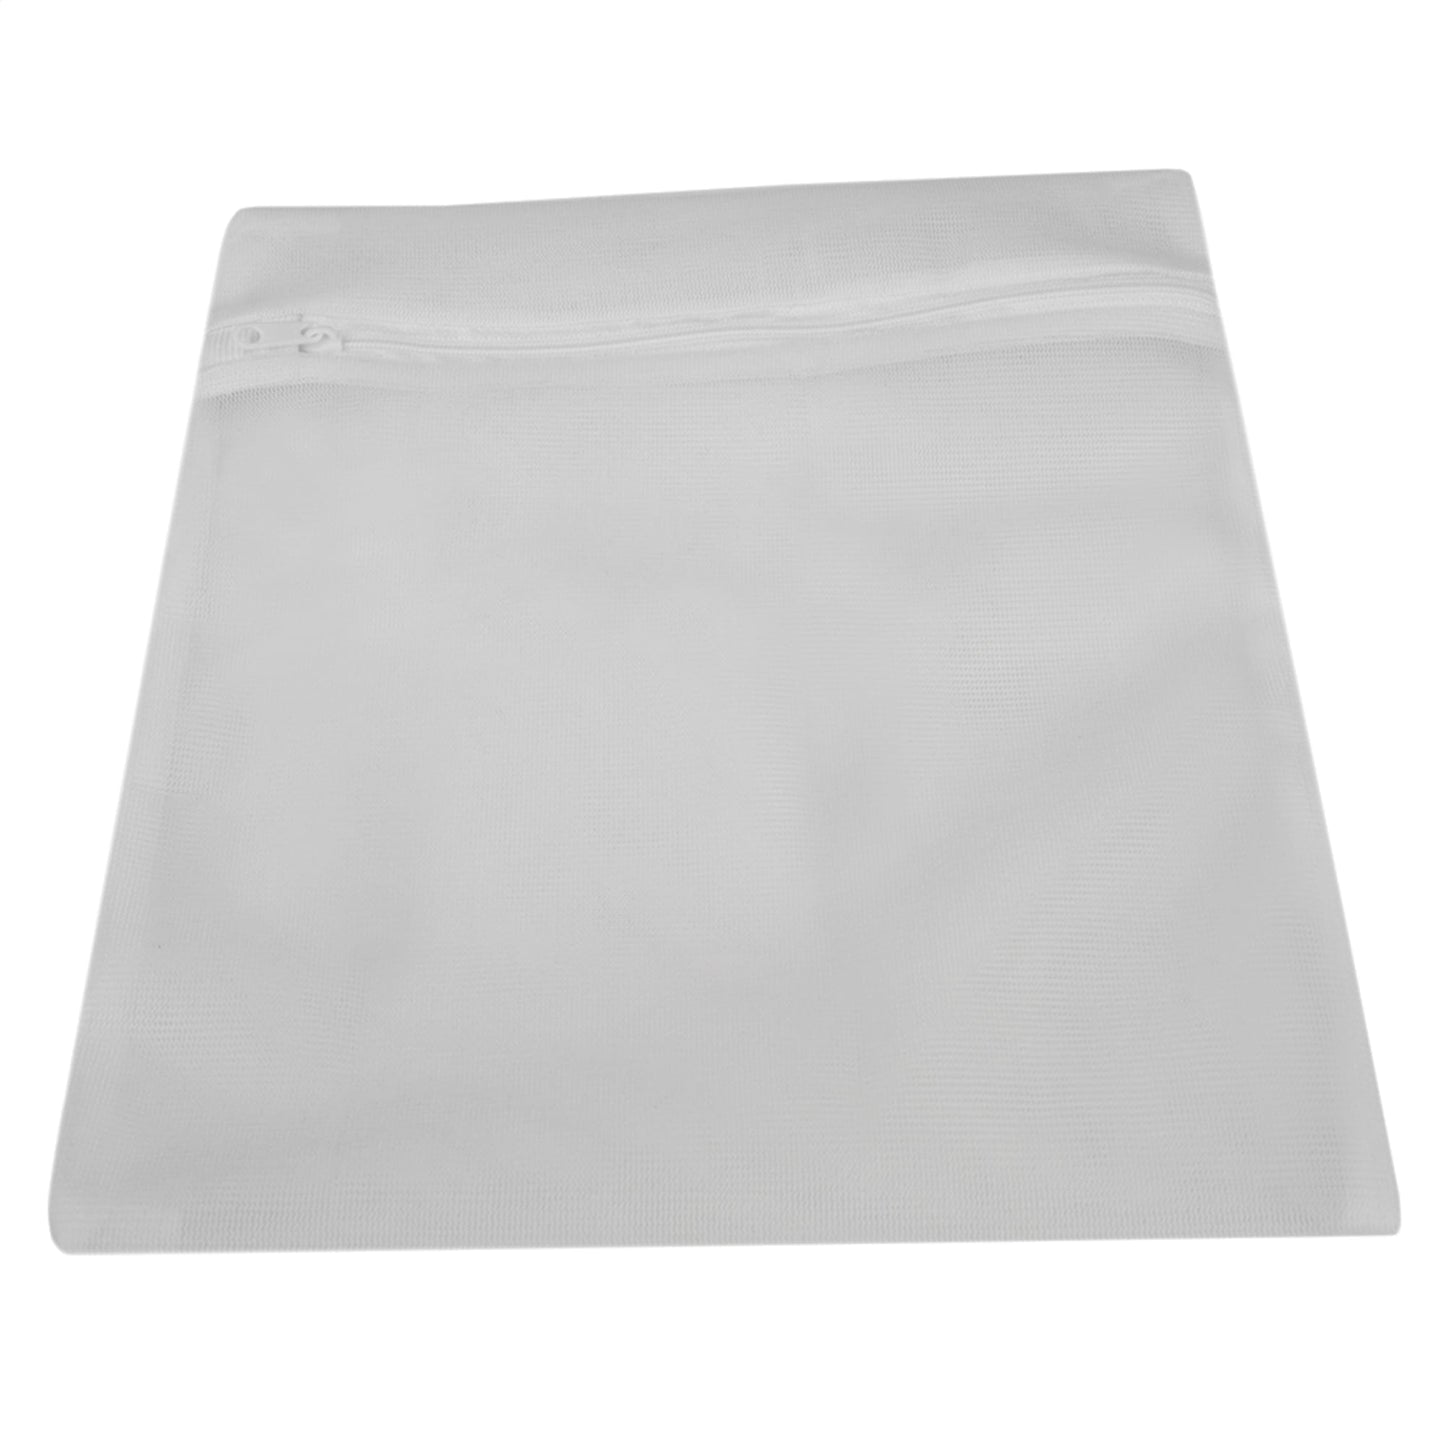 3 Piece Micro Mesh Wash Bag, White